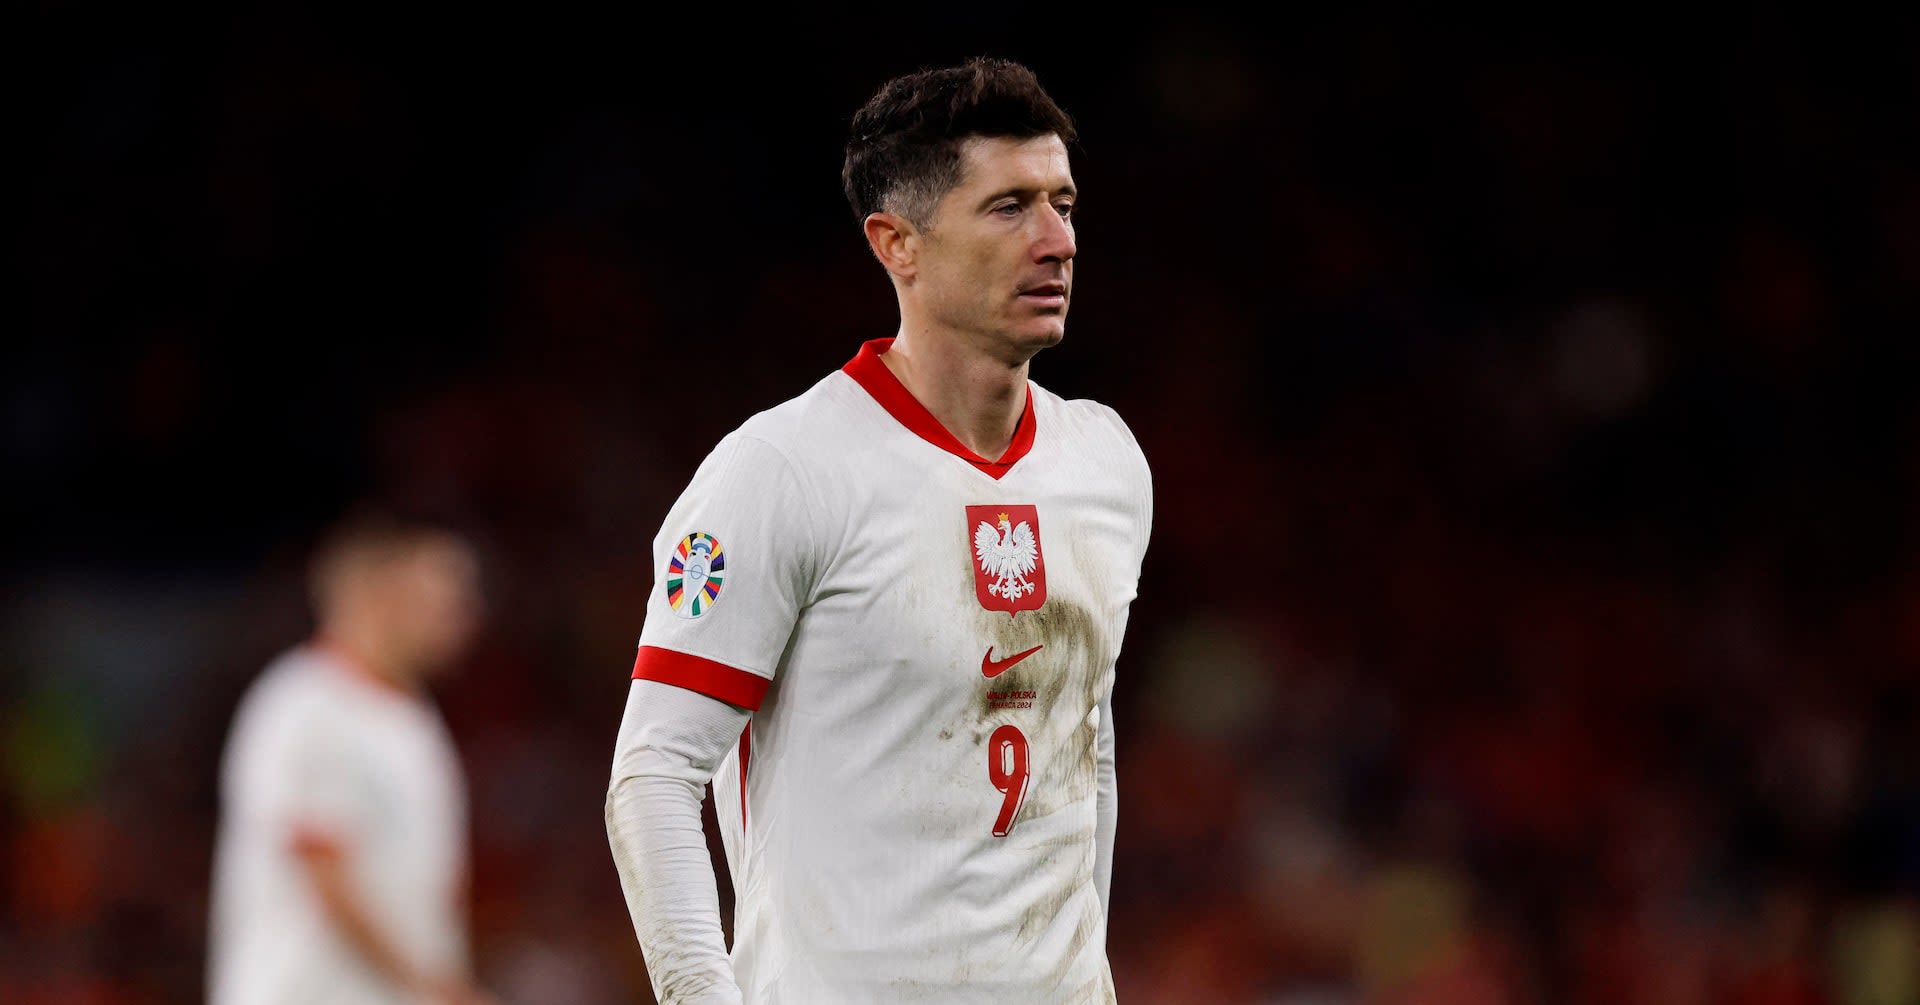 Poland can no longer count on captain Lewandowski for goals